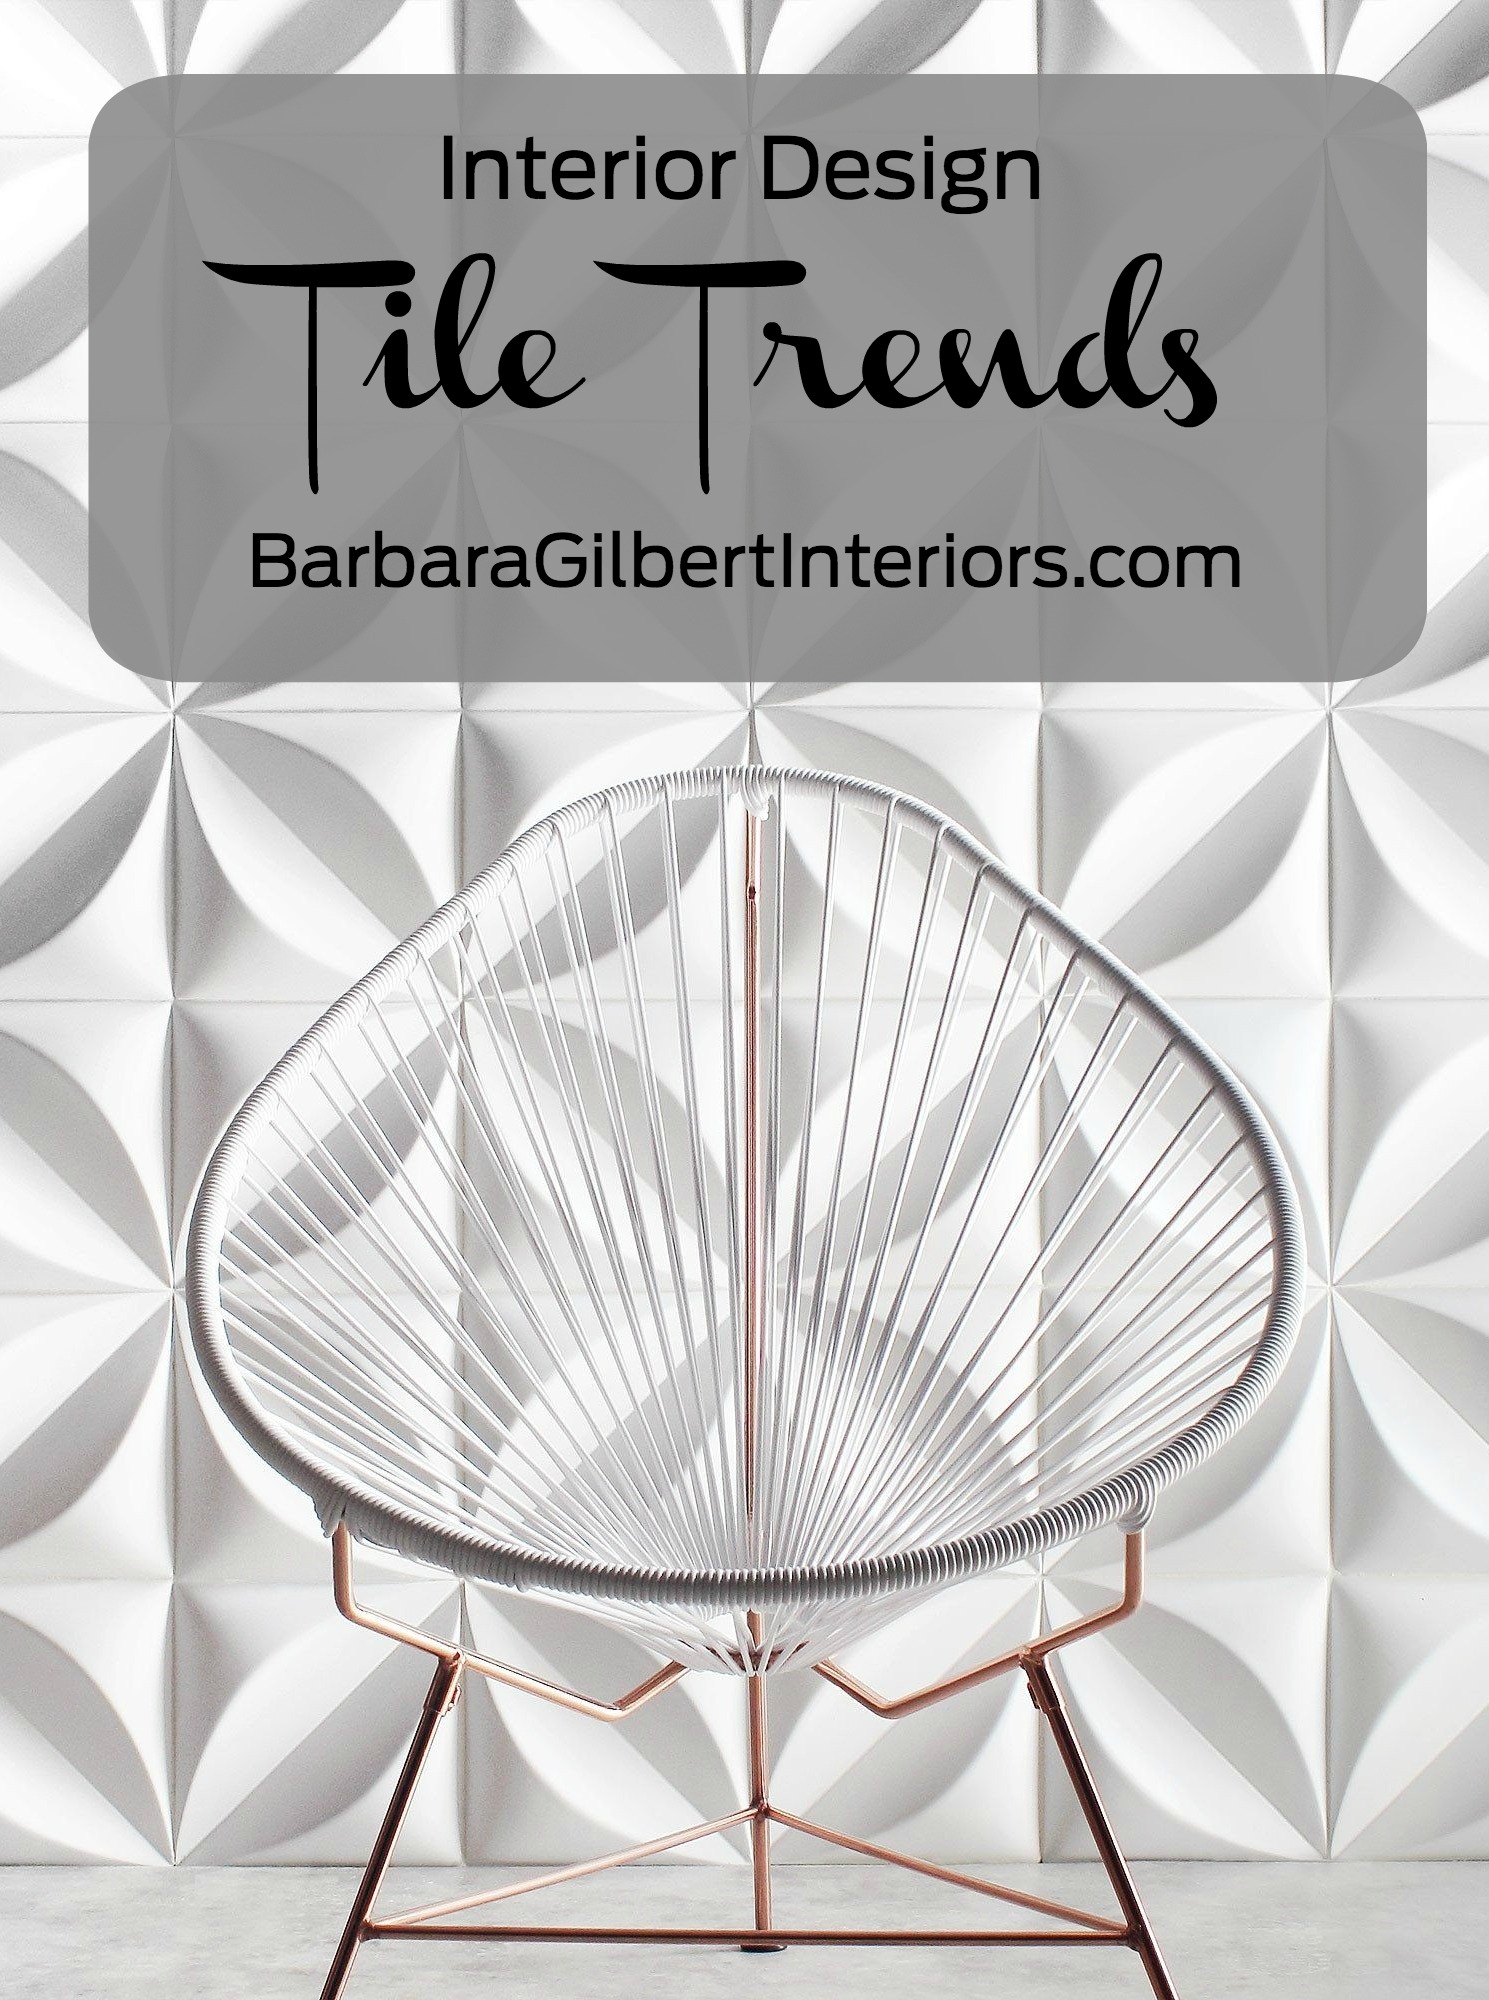 Interior Design Tile Trends 2017 | Interior Design Dallas | Barbara Gilbert Interiors